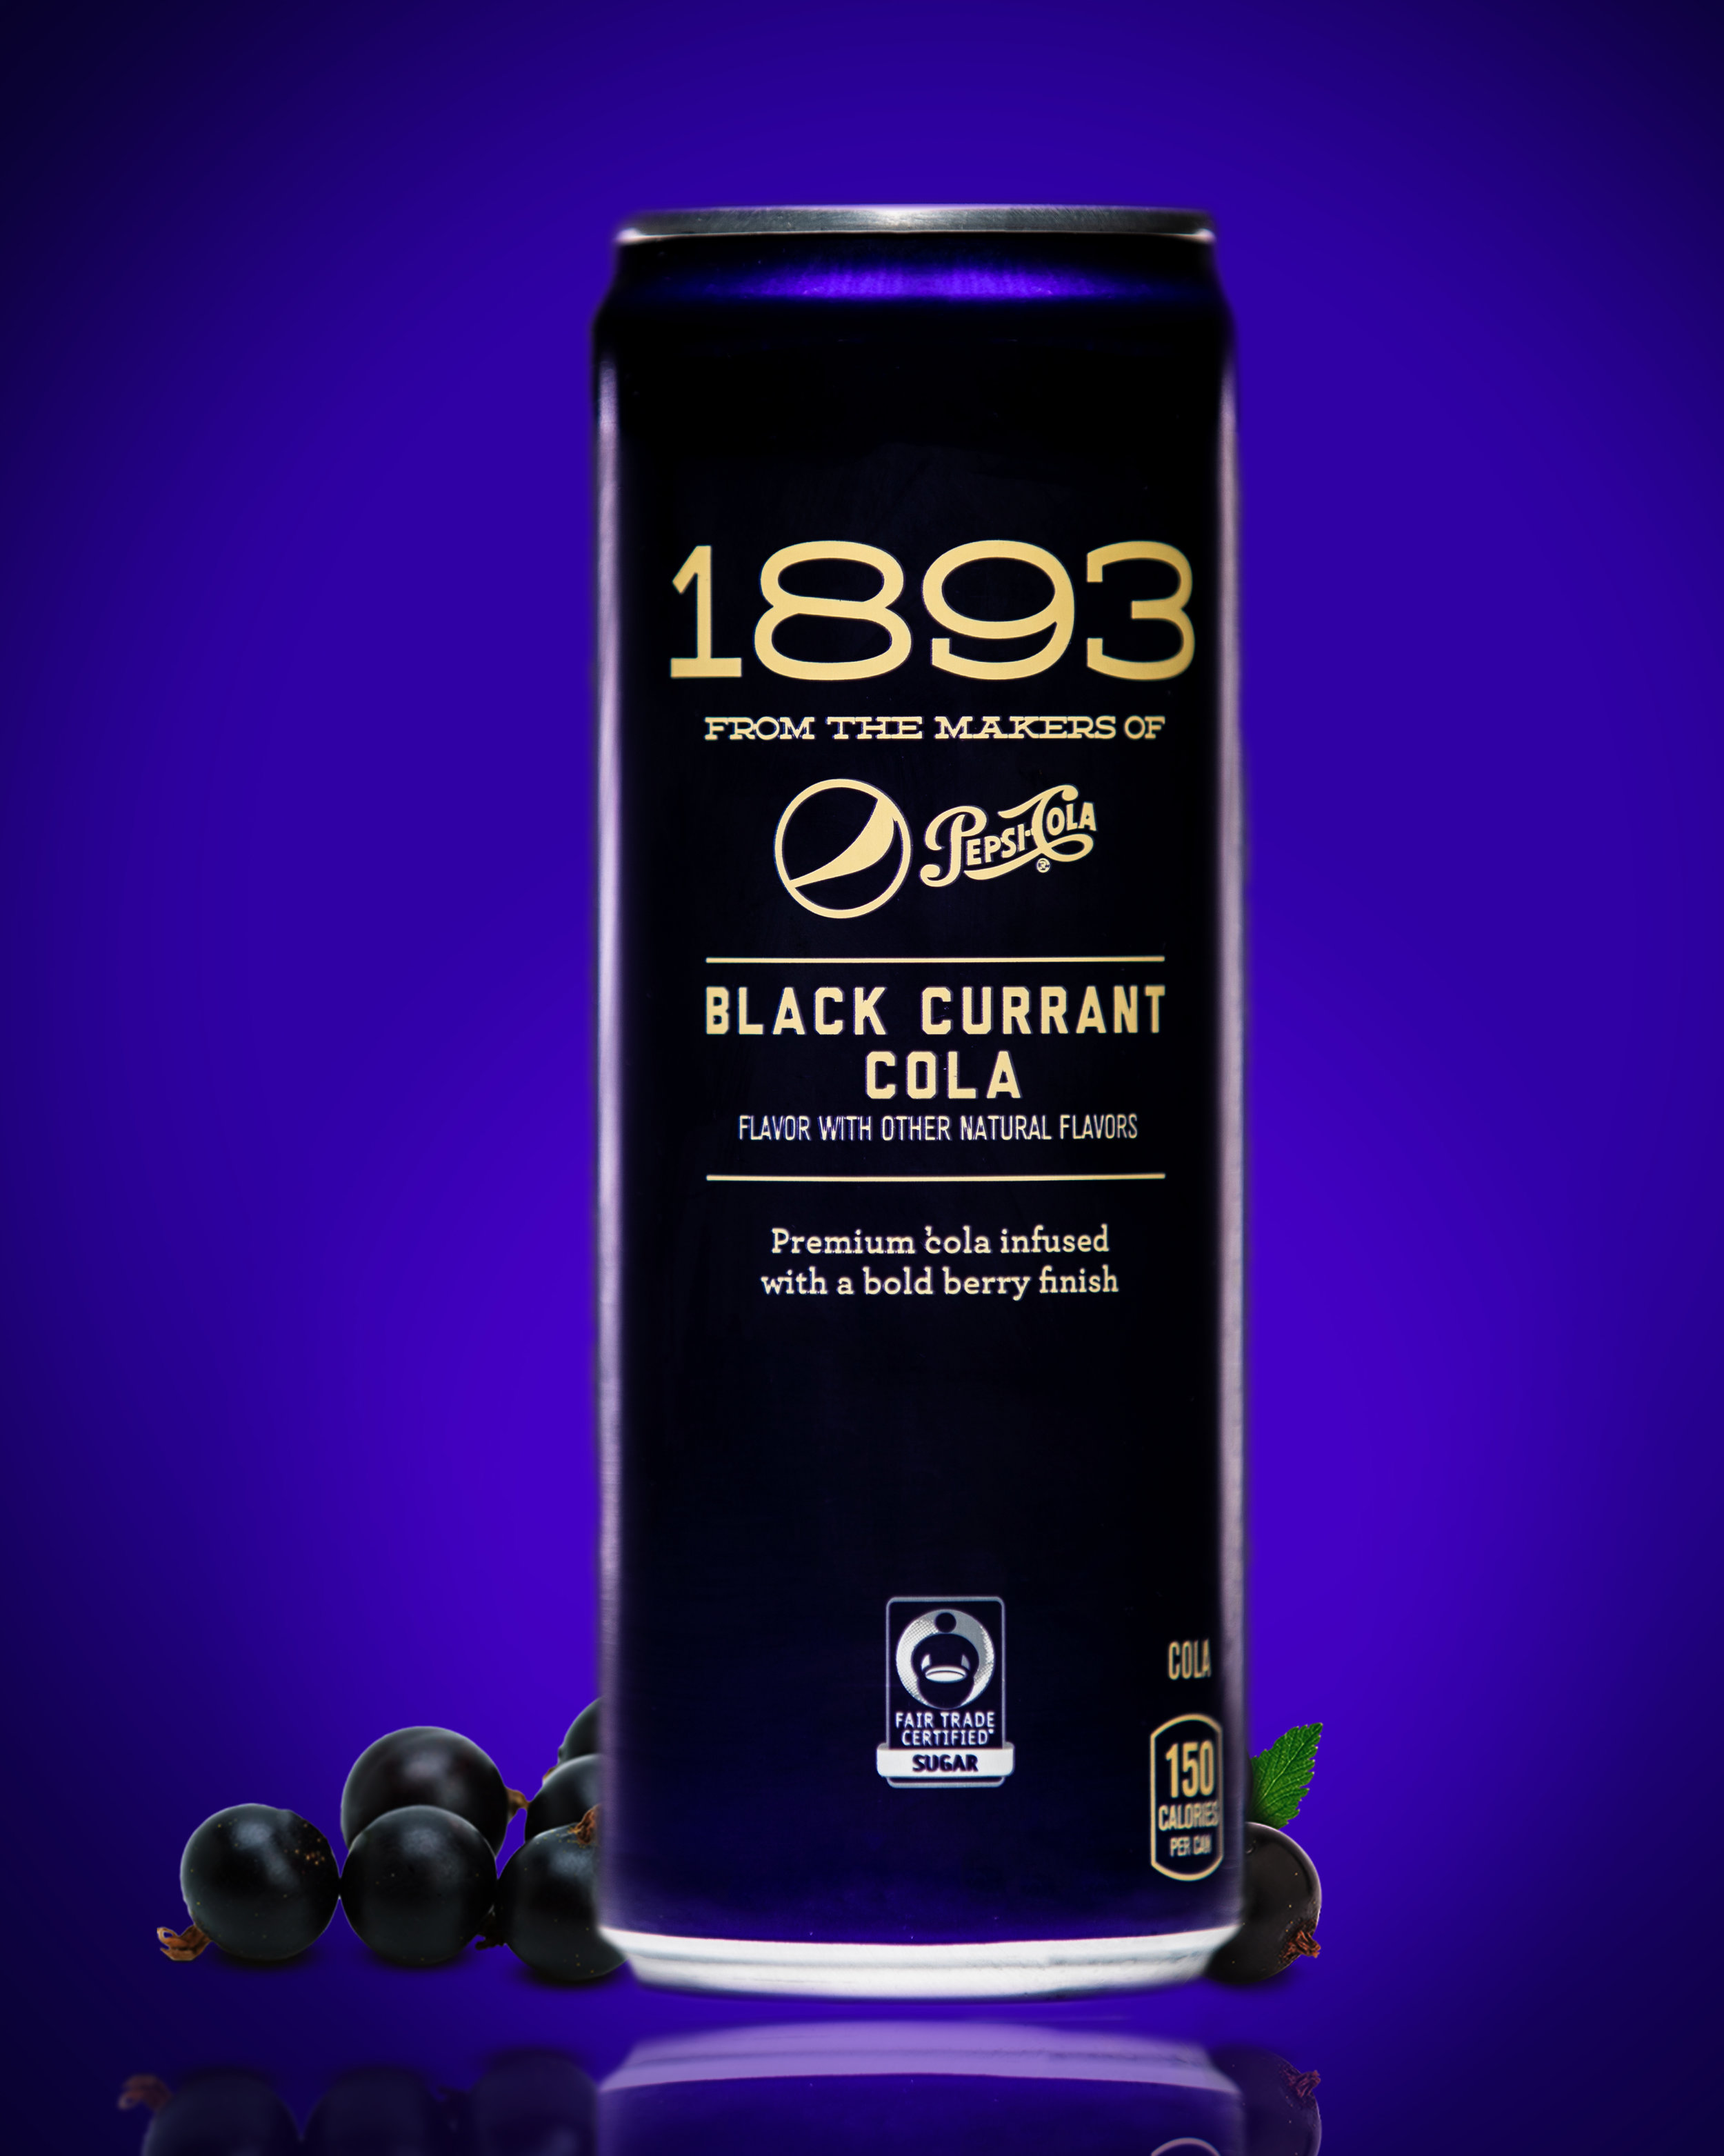 1893 Pesi-Cola Black Currant Cola Product Photography Mannys Creations.jpg